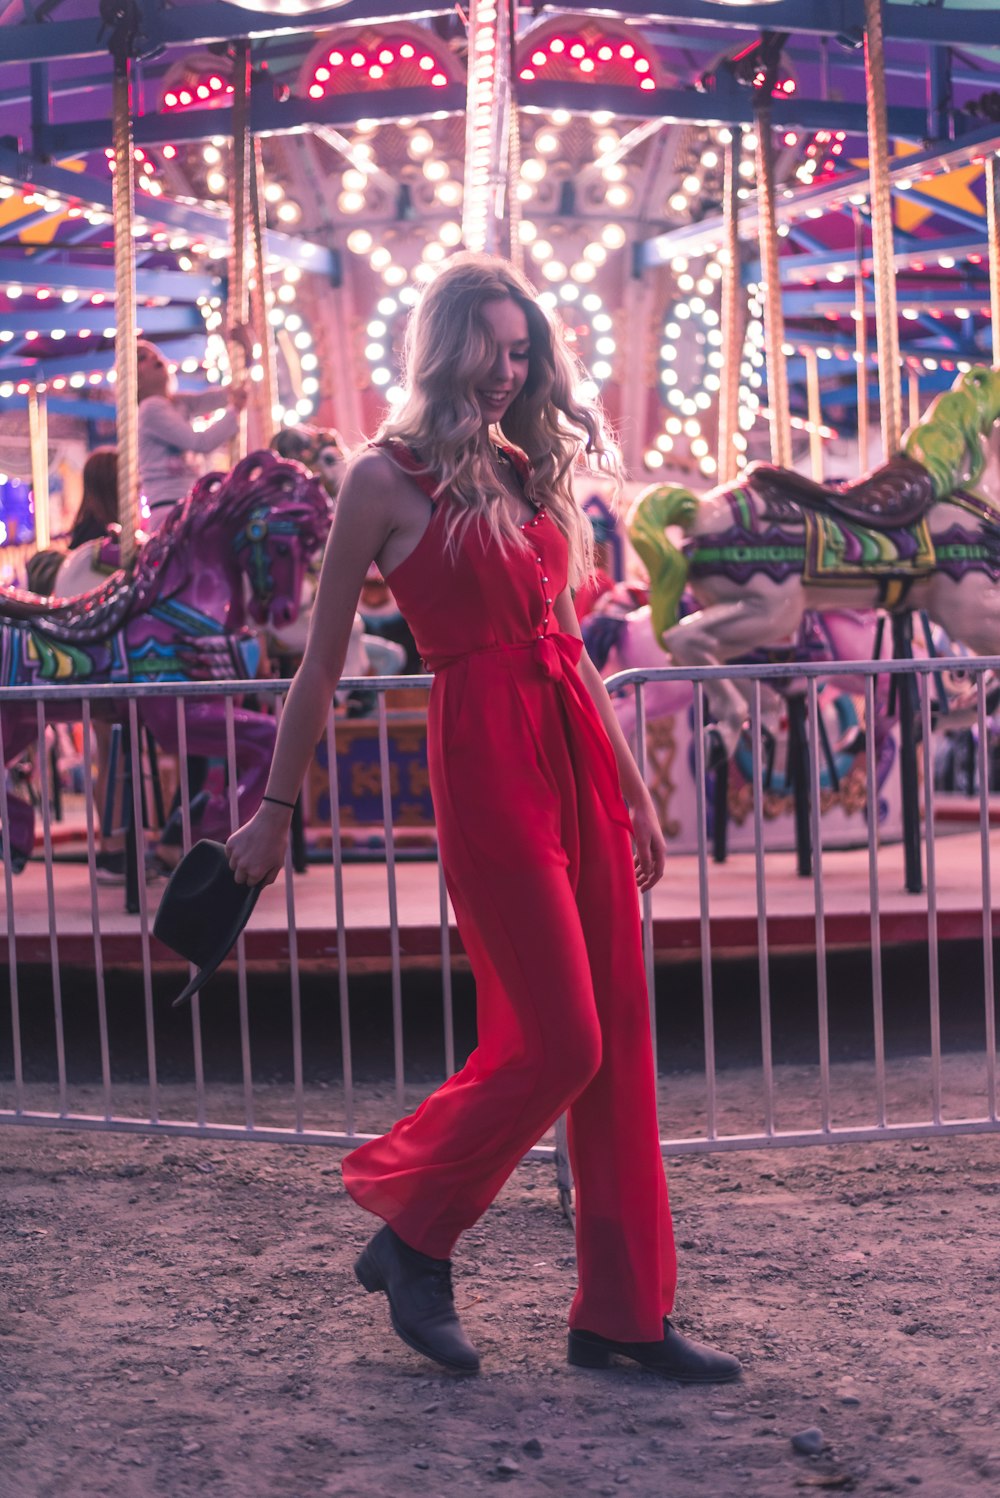 girl in red dress standing near carousel during daytime